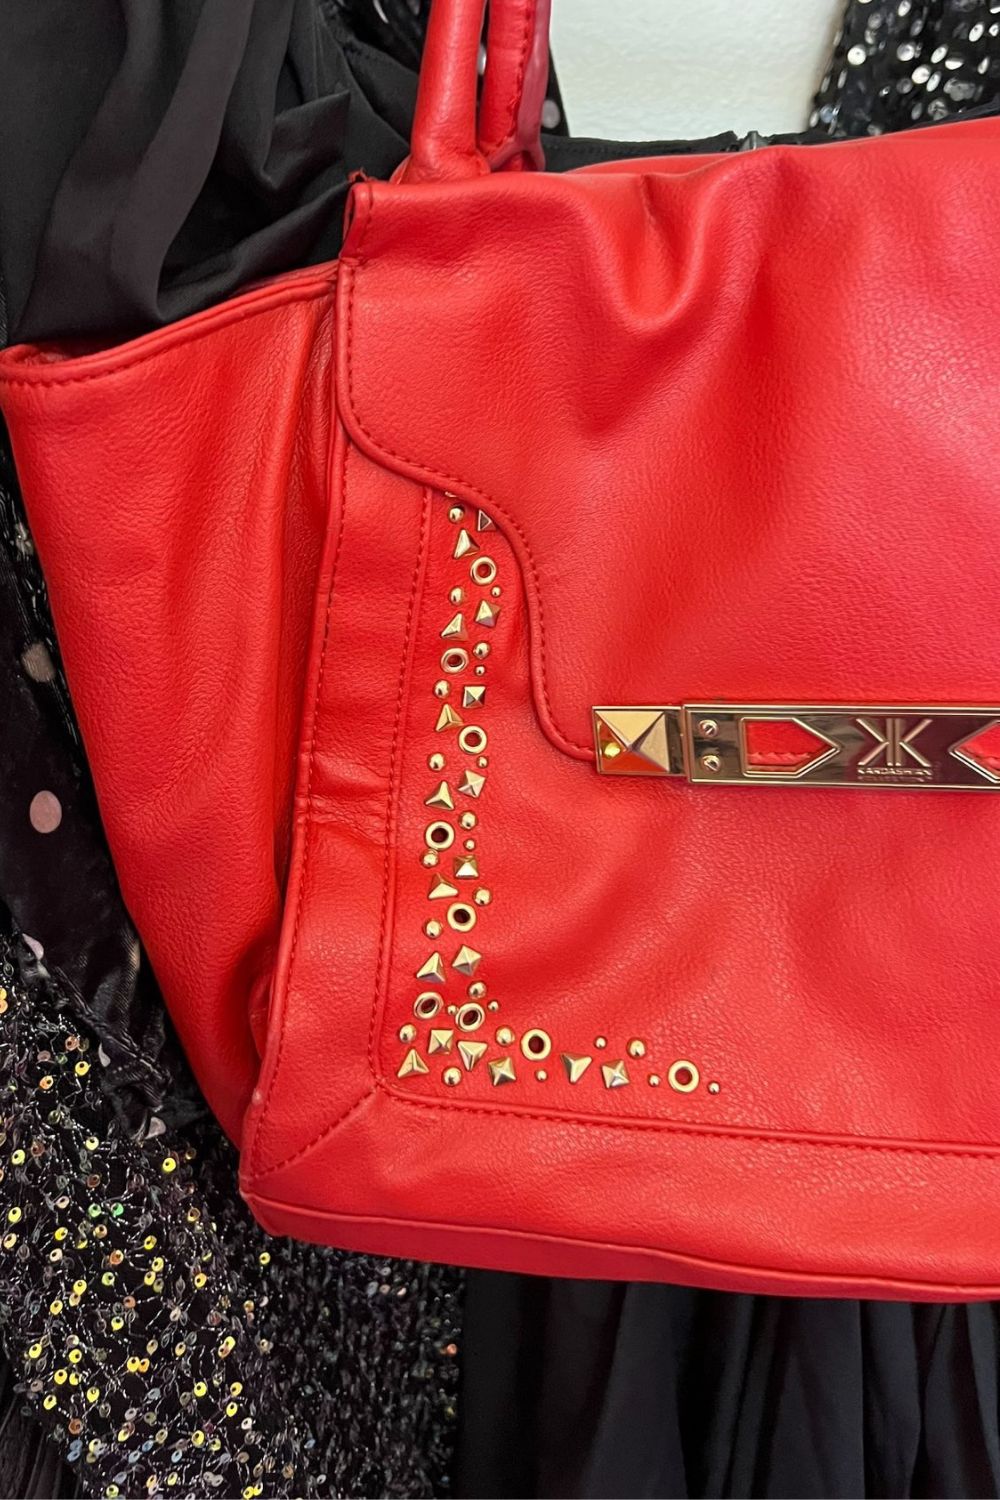 KK Wallet Long Design Women Wallets Fashion Brand PU Leather Kim Kardashian  Kollection High Grade Clutch Bag Zipper Coin Purse Han280n From Liliooo,  $10.15 | DHgate.Com